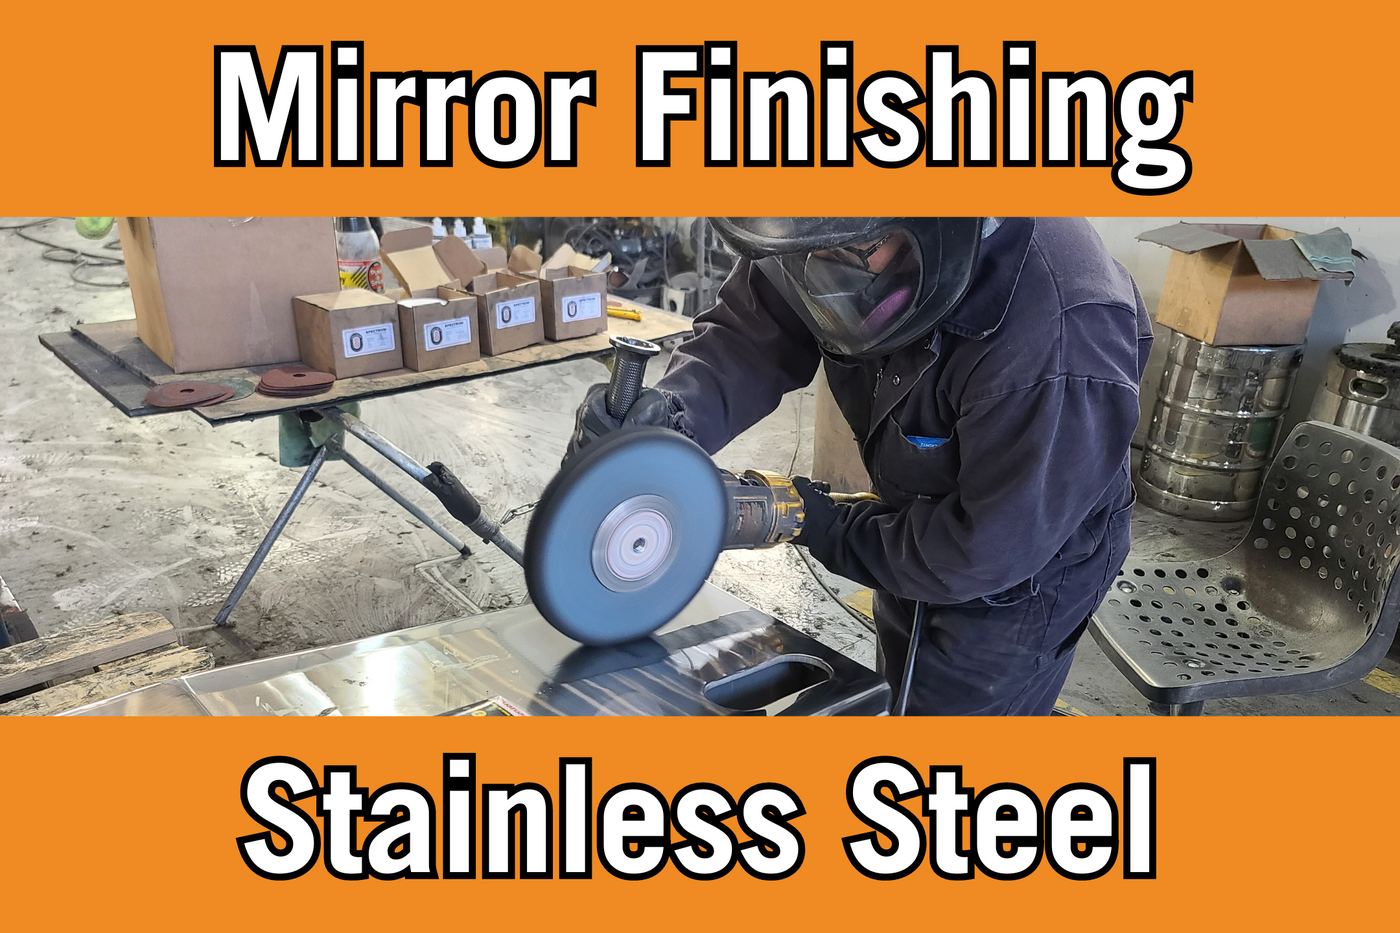 Mirror Finishing Stainless Steel